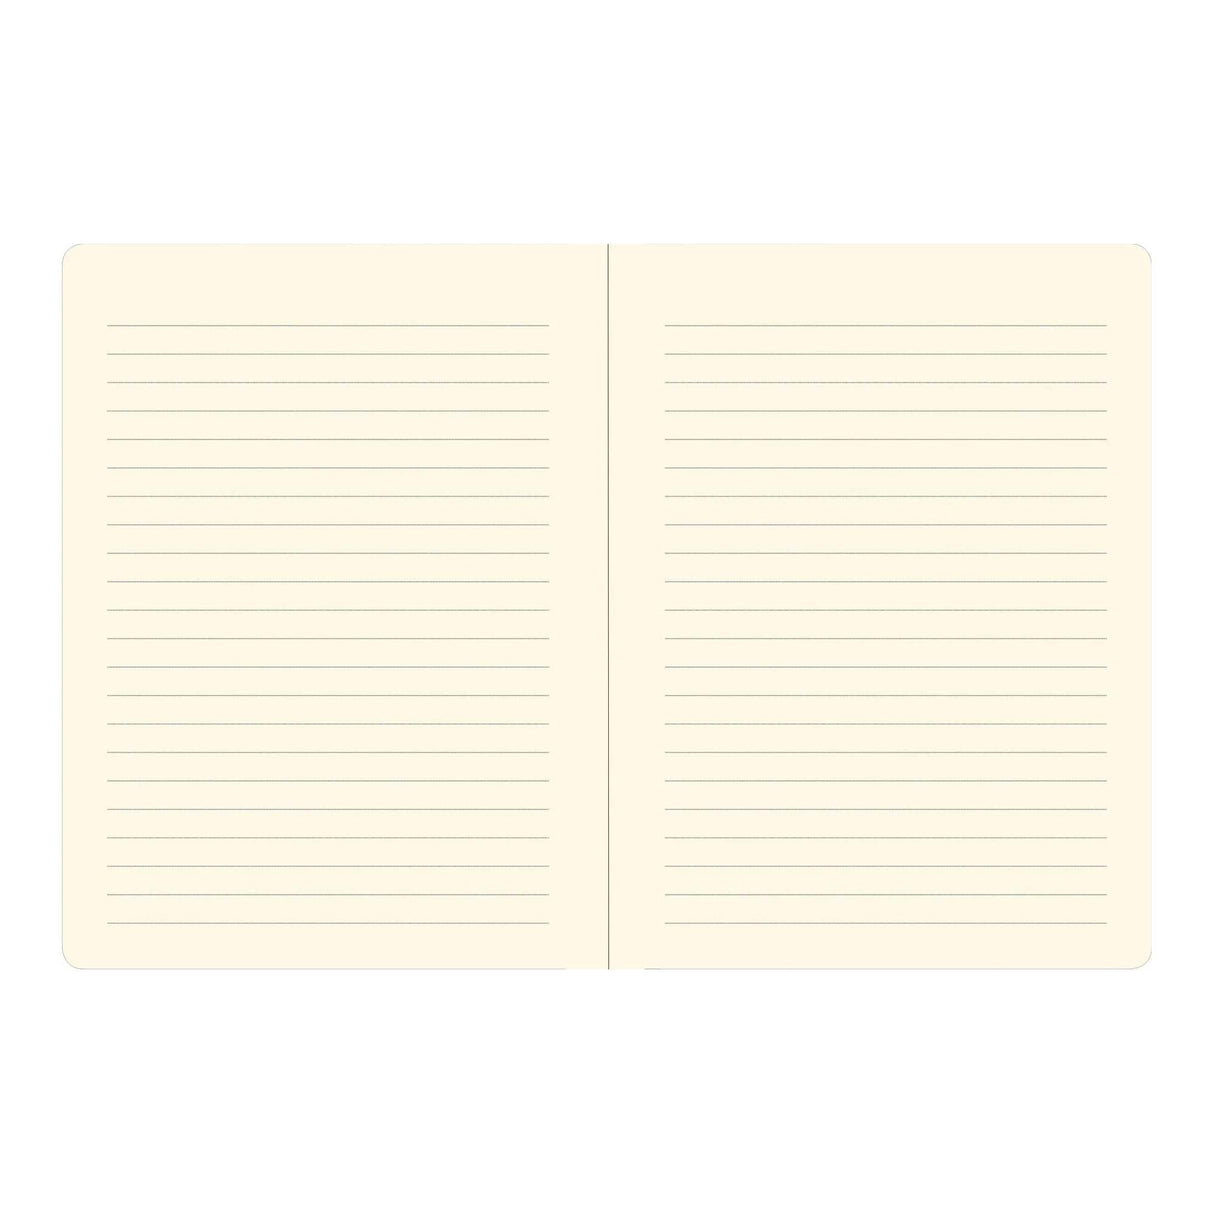 Sunflower Dreams Journal Notebook - Lined